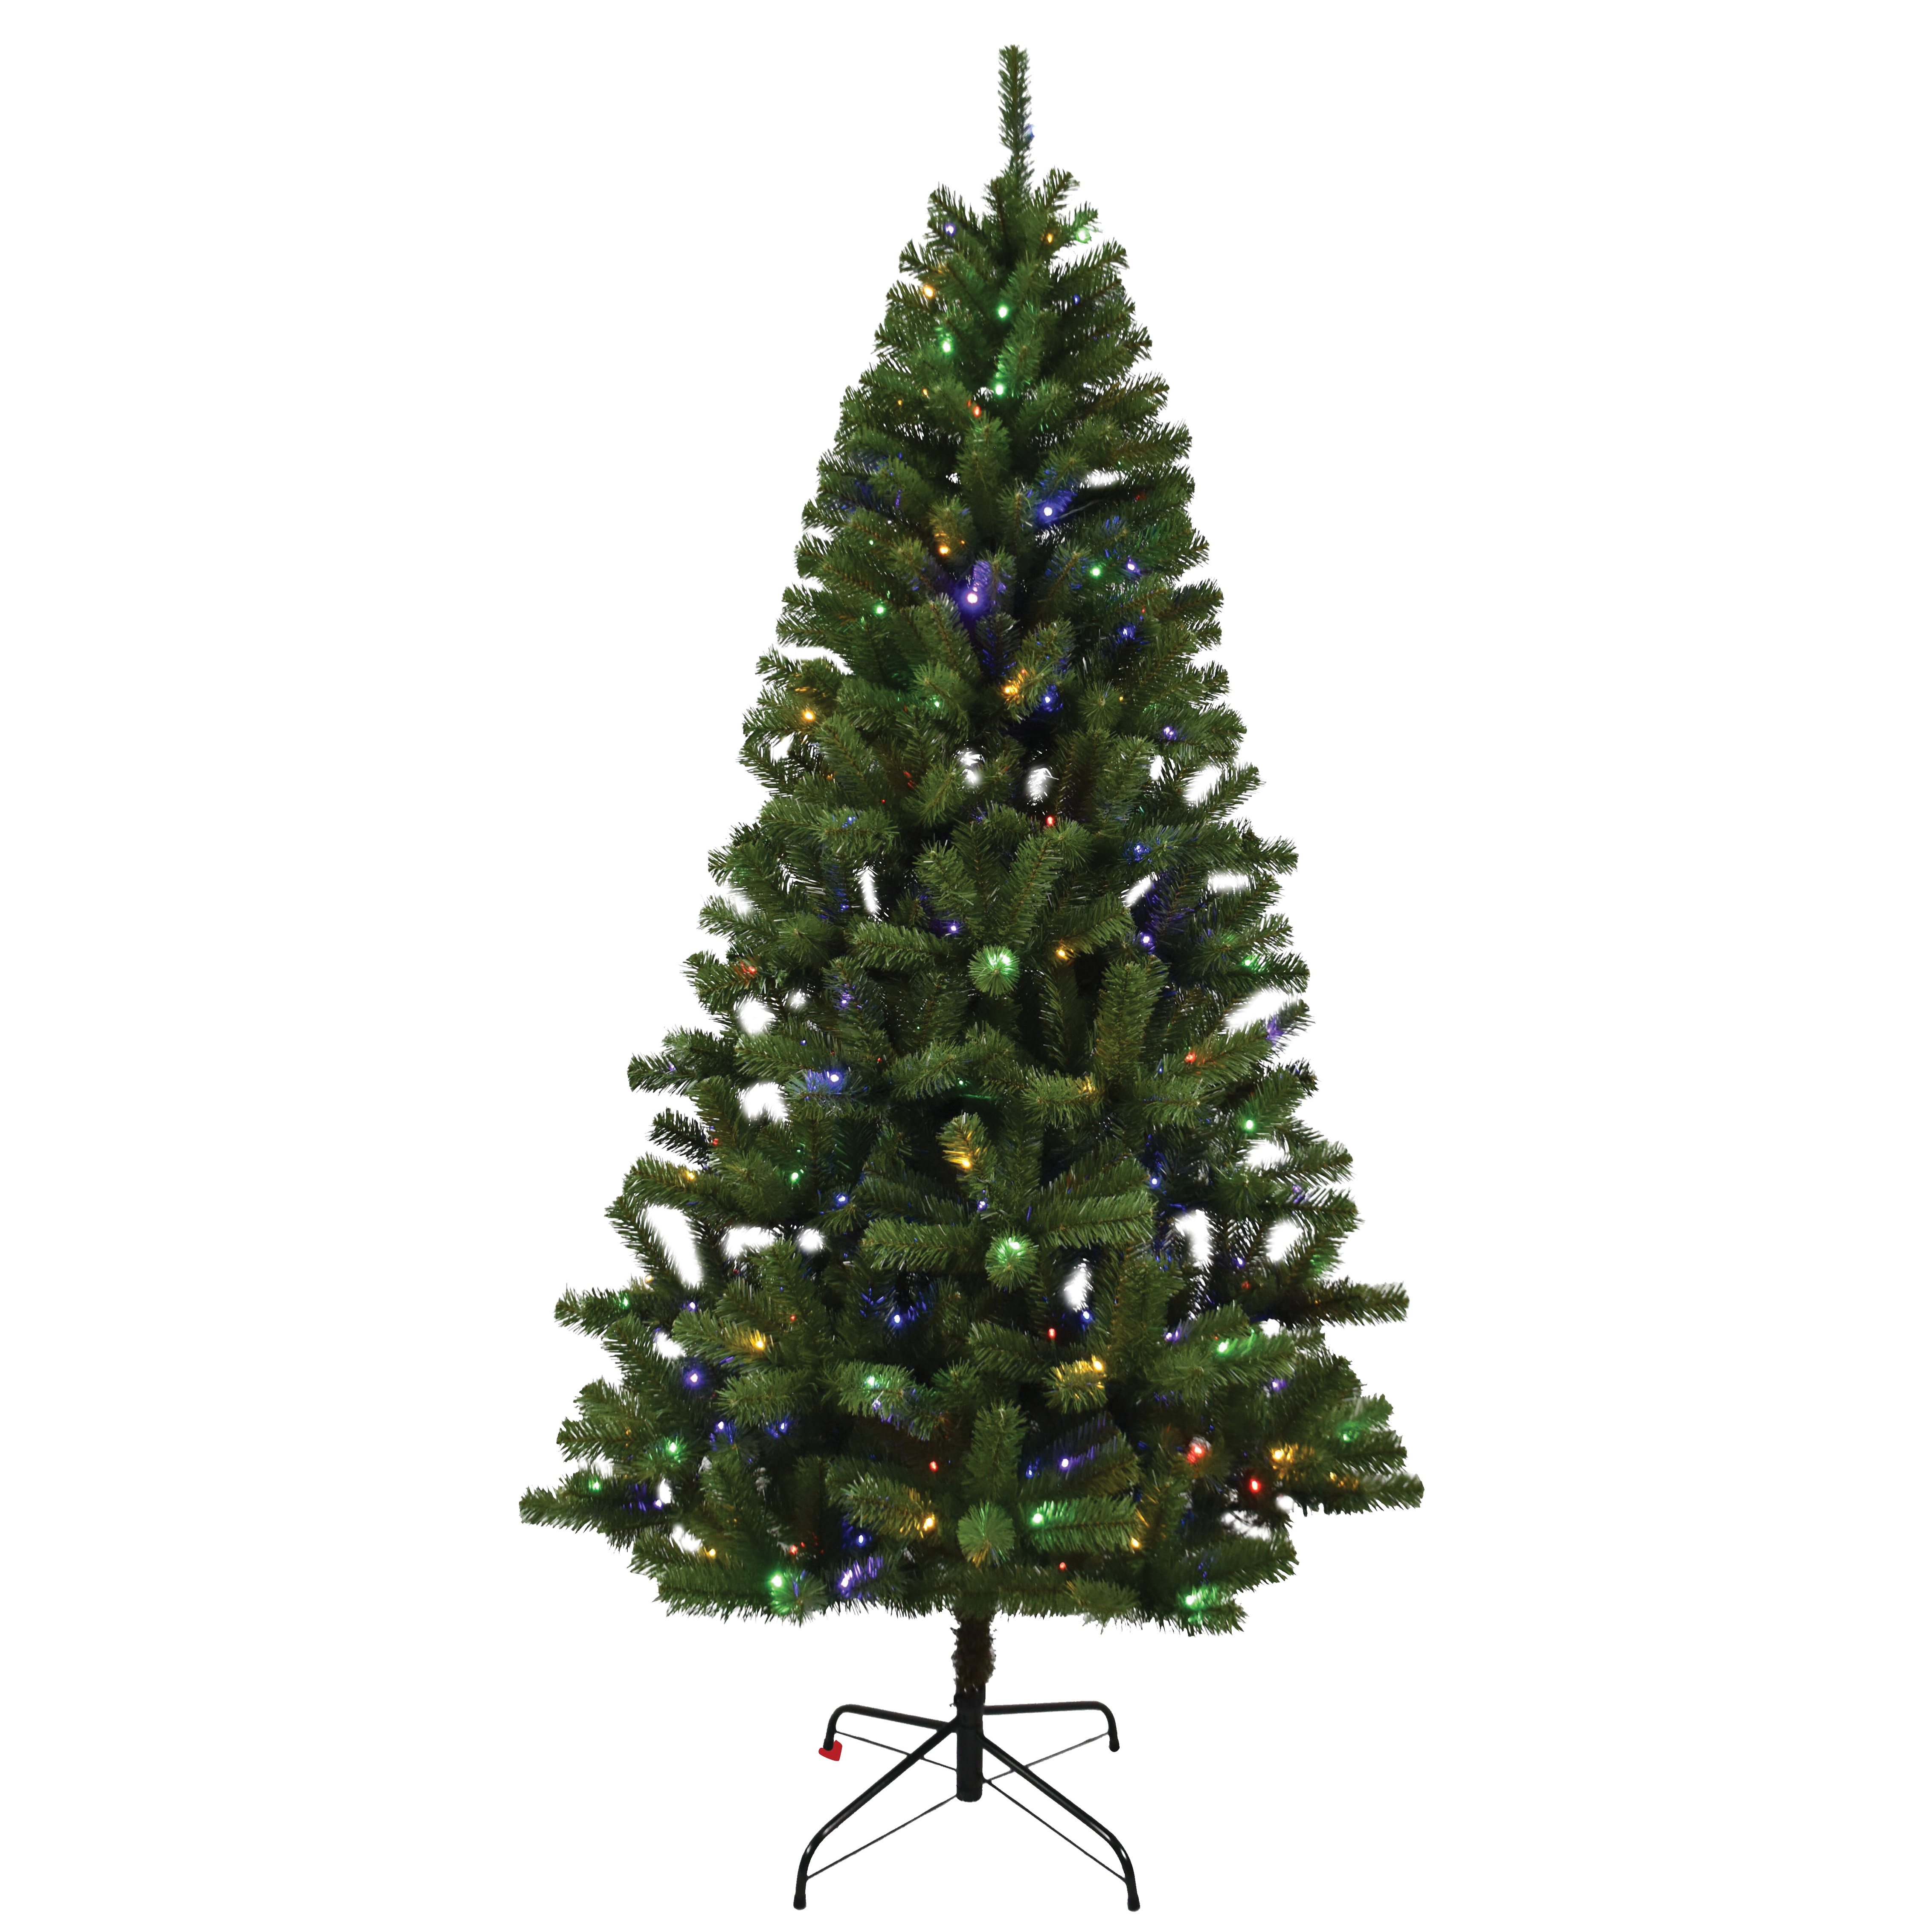 10973 Christmas Tree, 7 ft H, Douglas Fir Family, CUL Adapter, Mini LED Bulb, White Light